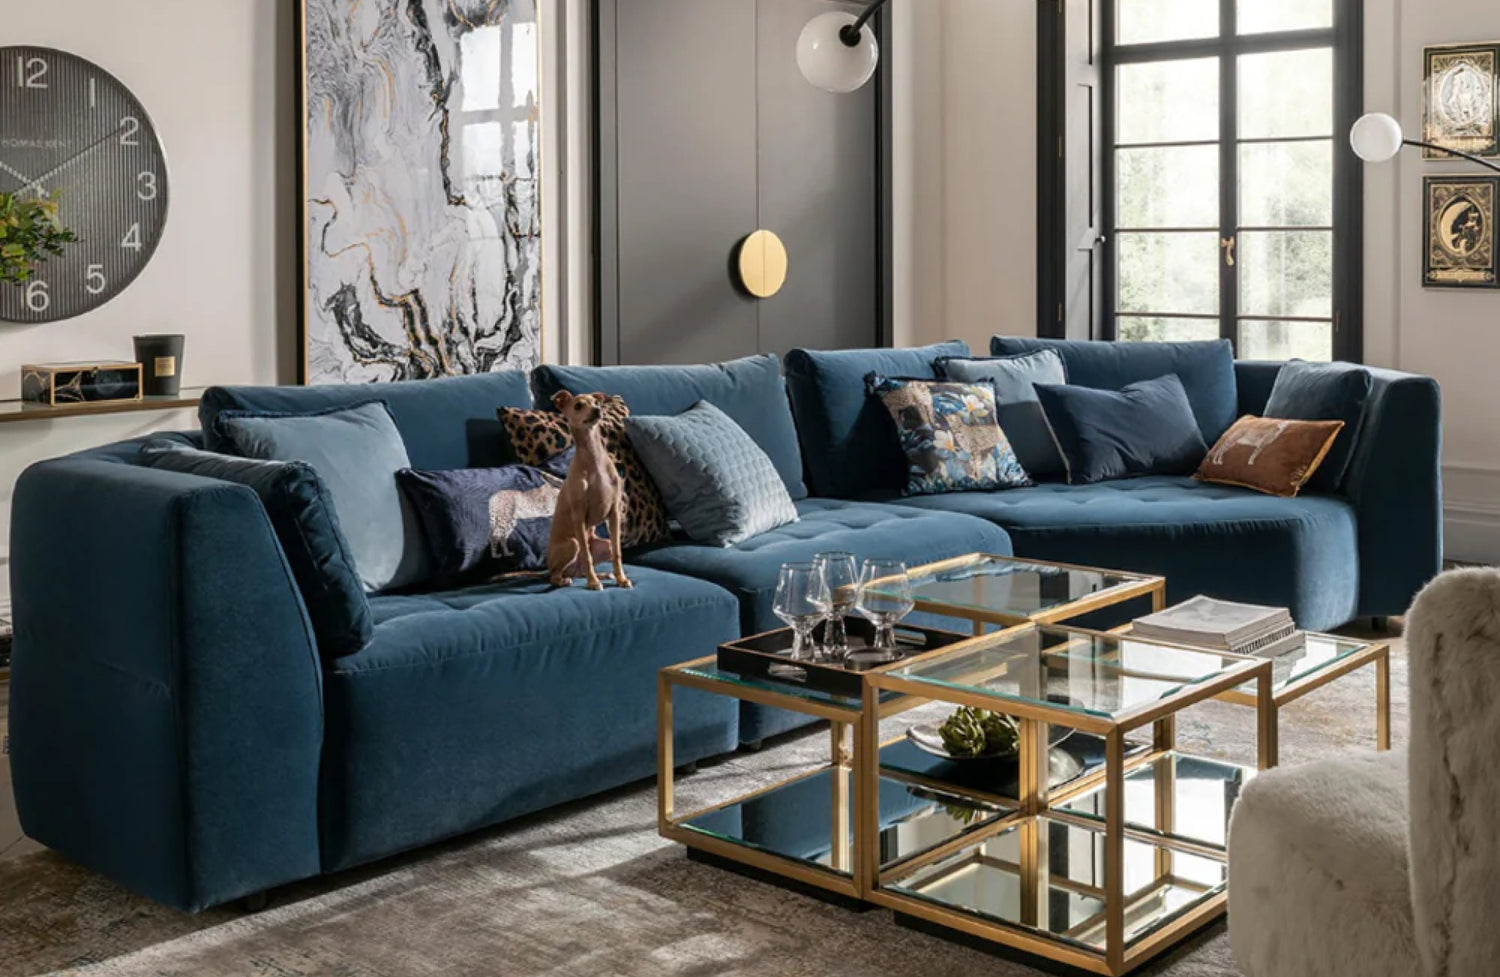 decorating around a navy blue sofa